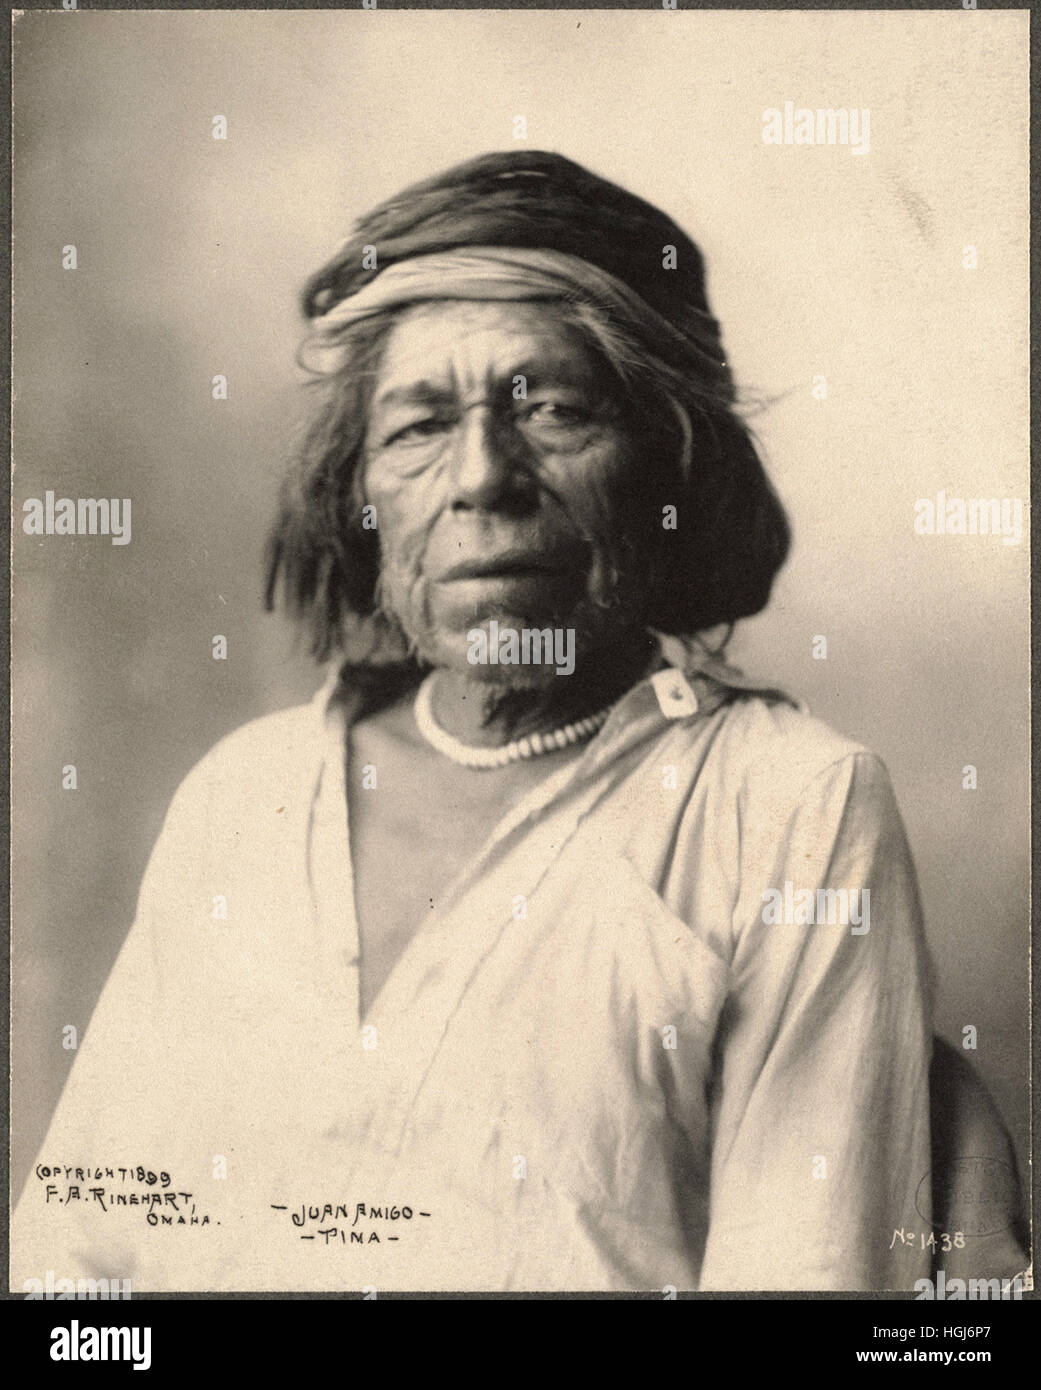 Juan Amigo, Pima - 1898 Indian Congress - Photo : Frank A. Rinehart Banque D'Images